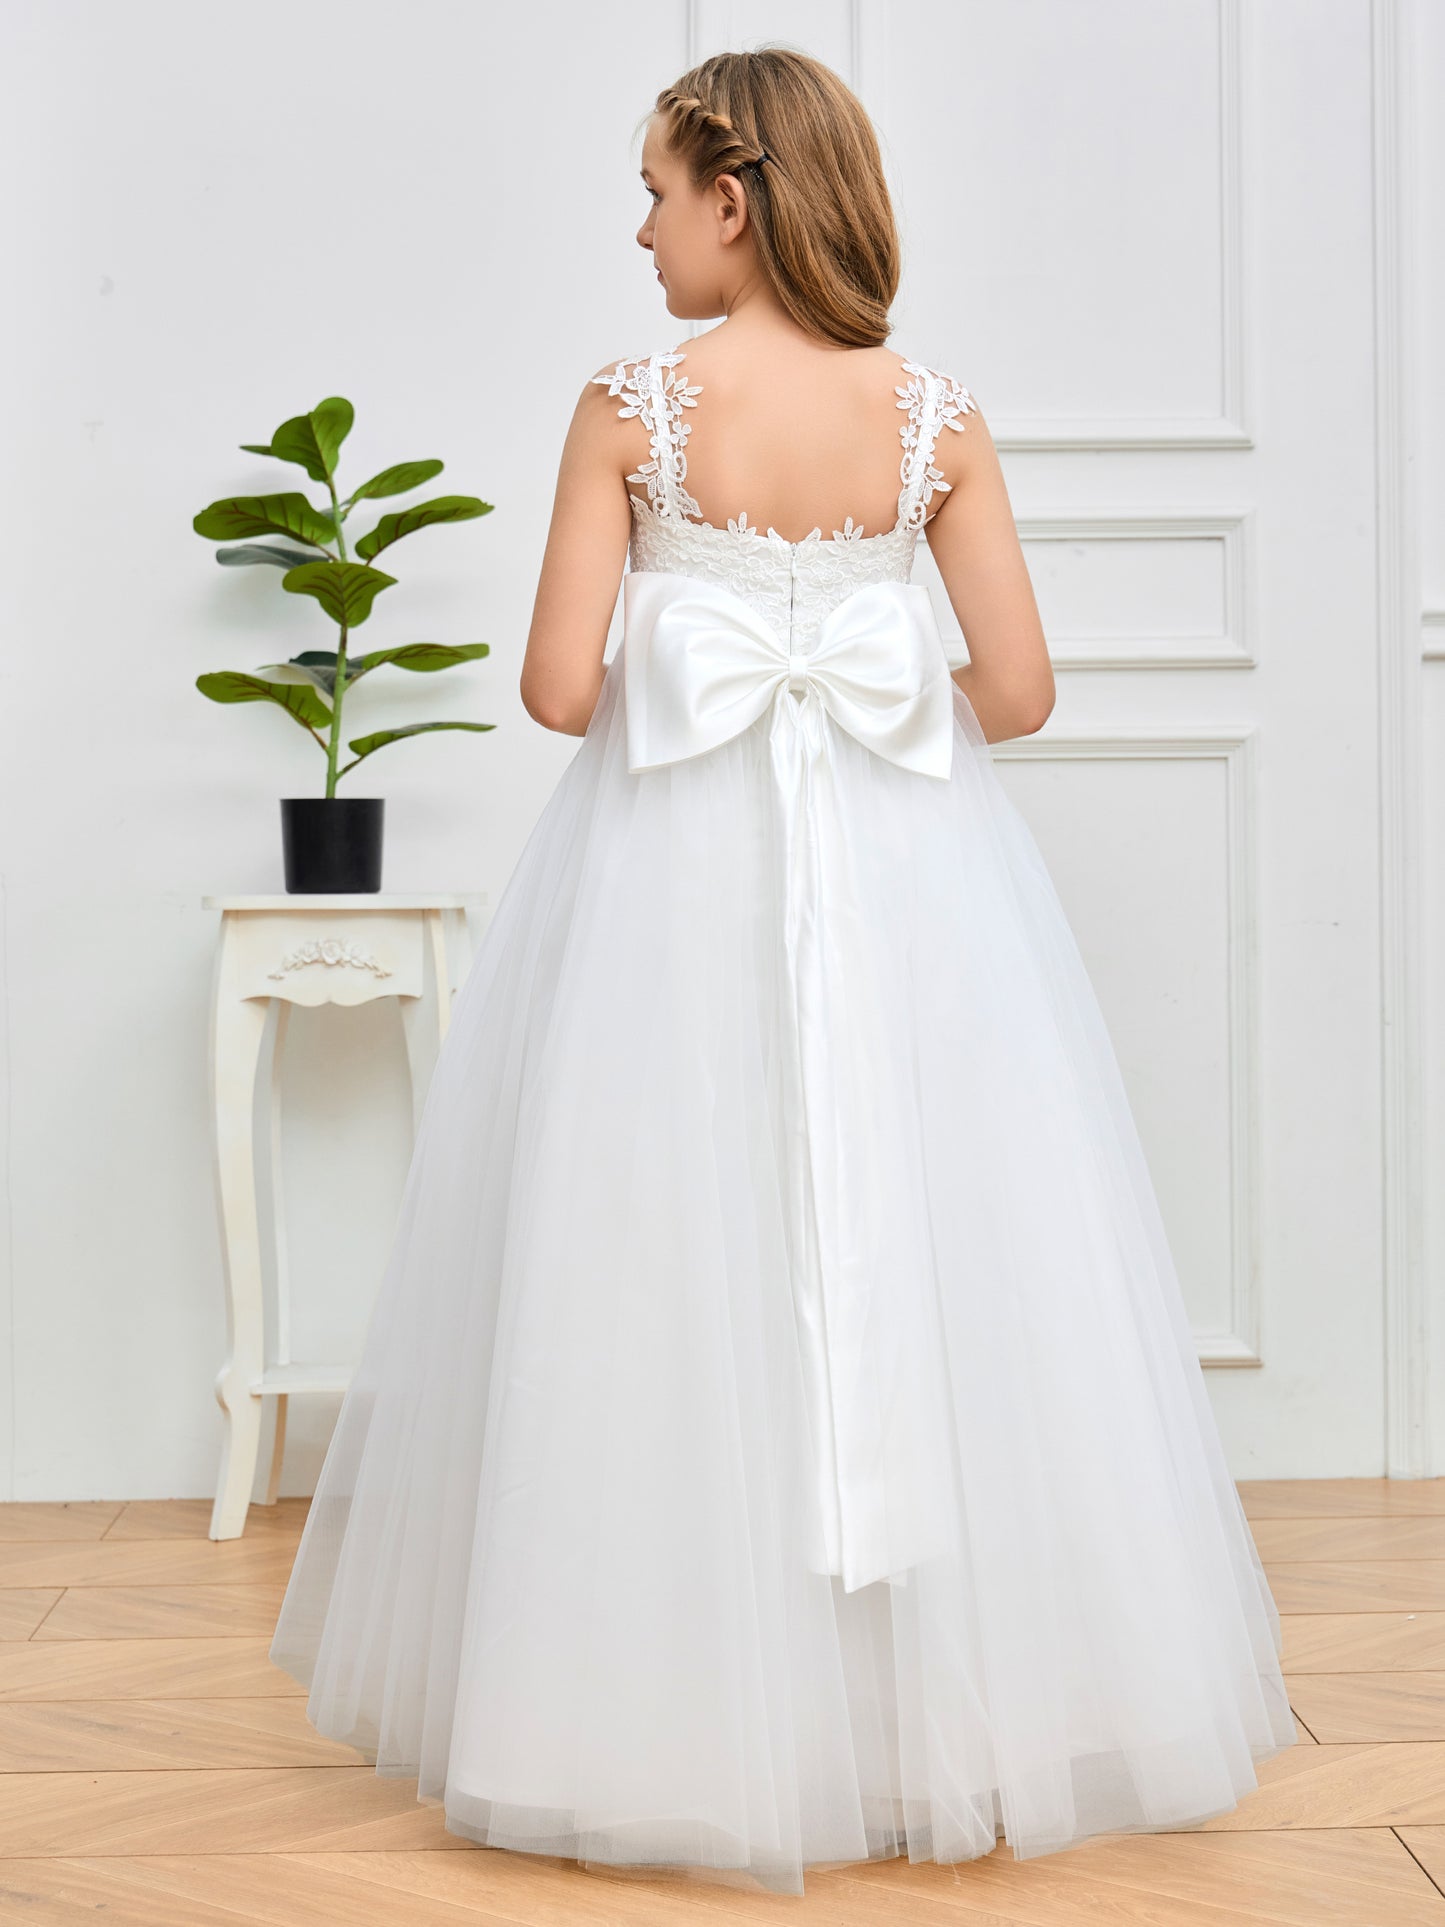 Bowknot Sleeveless Junior Bridesmaid Dress